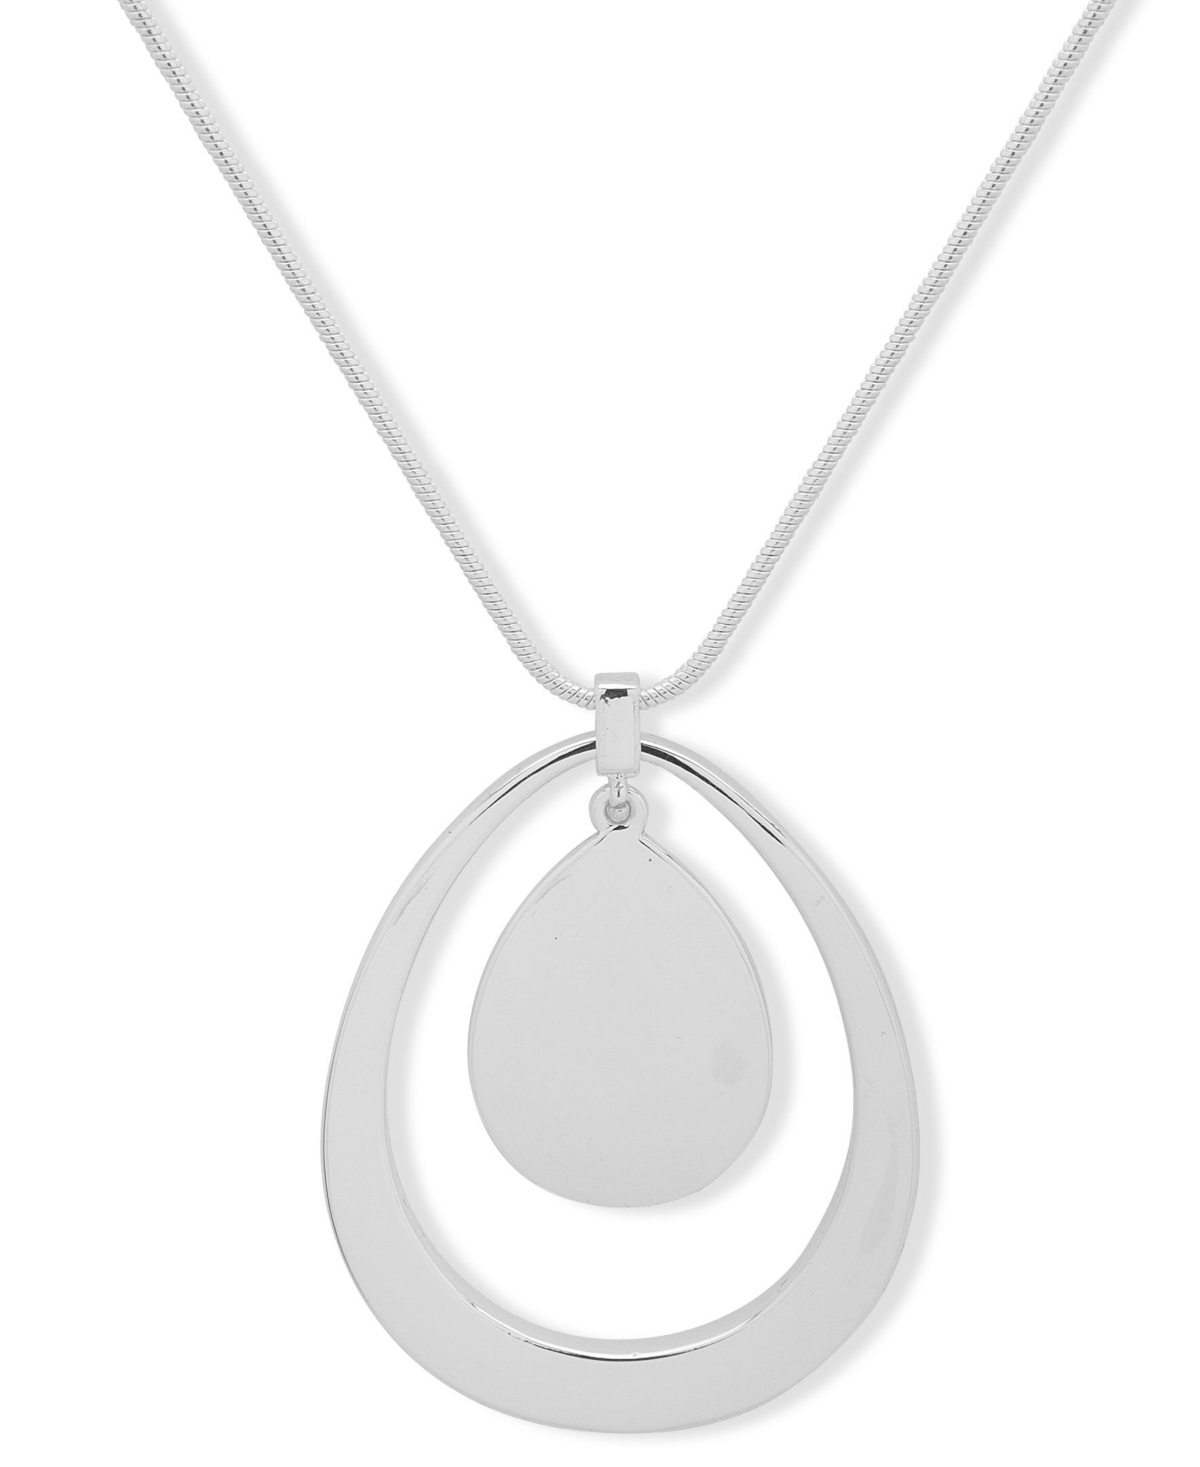 Adjustable Pendant Necklace - Silver-tone